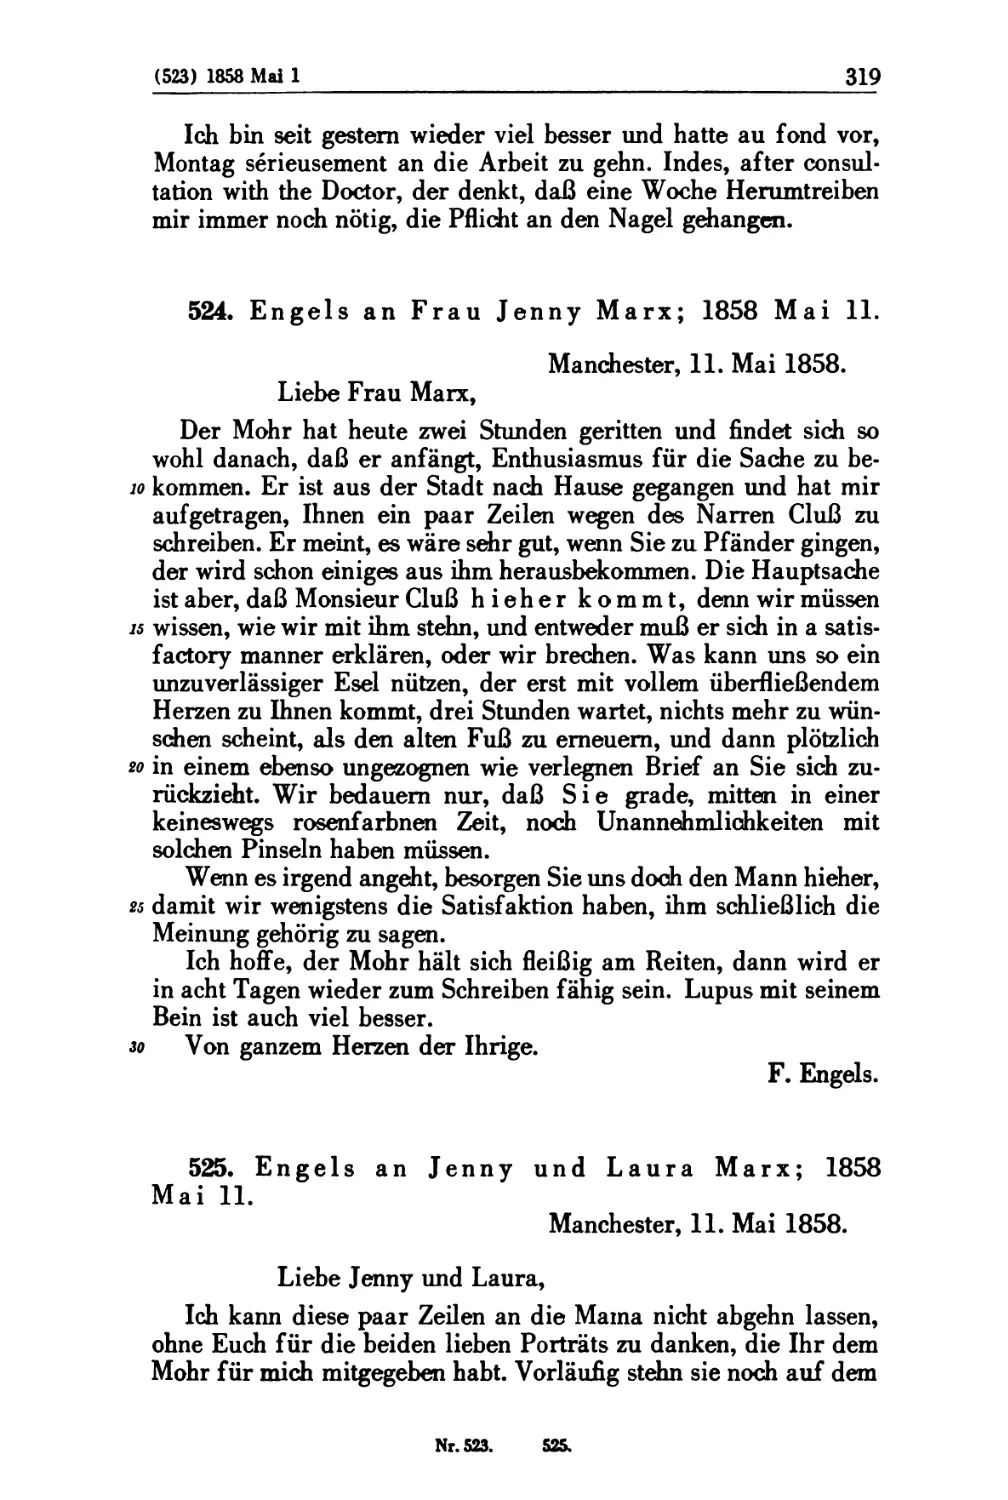 524. Engels an Frau Jenny Marx; 1858 Mai 11
525. Engels an Jenny und Laura Marx; 1858 Mai 11